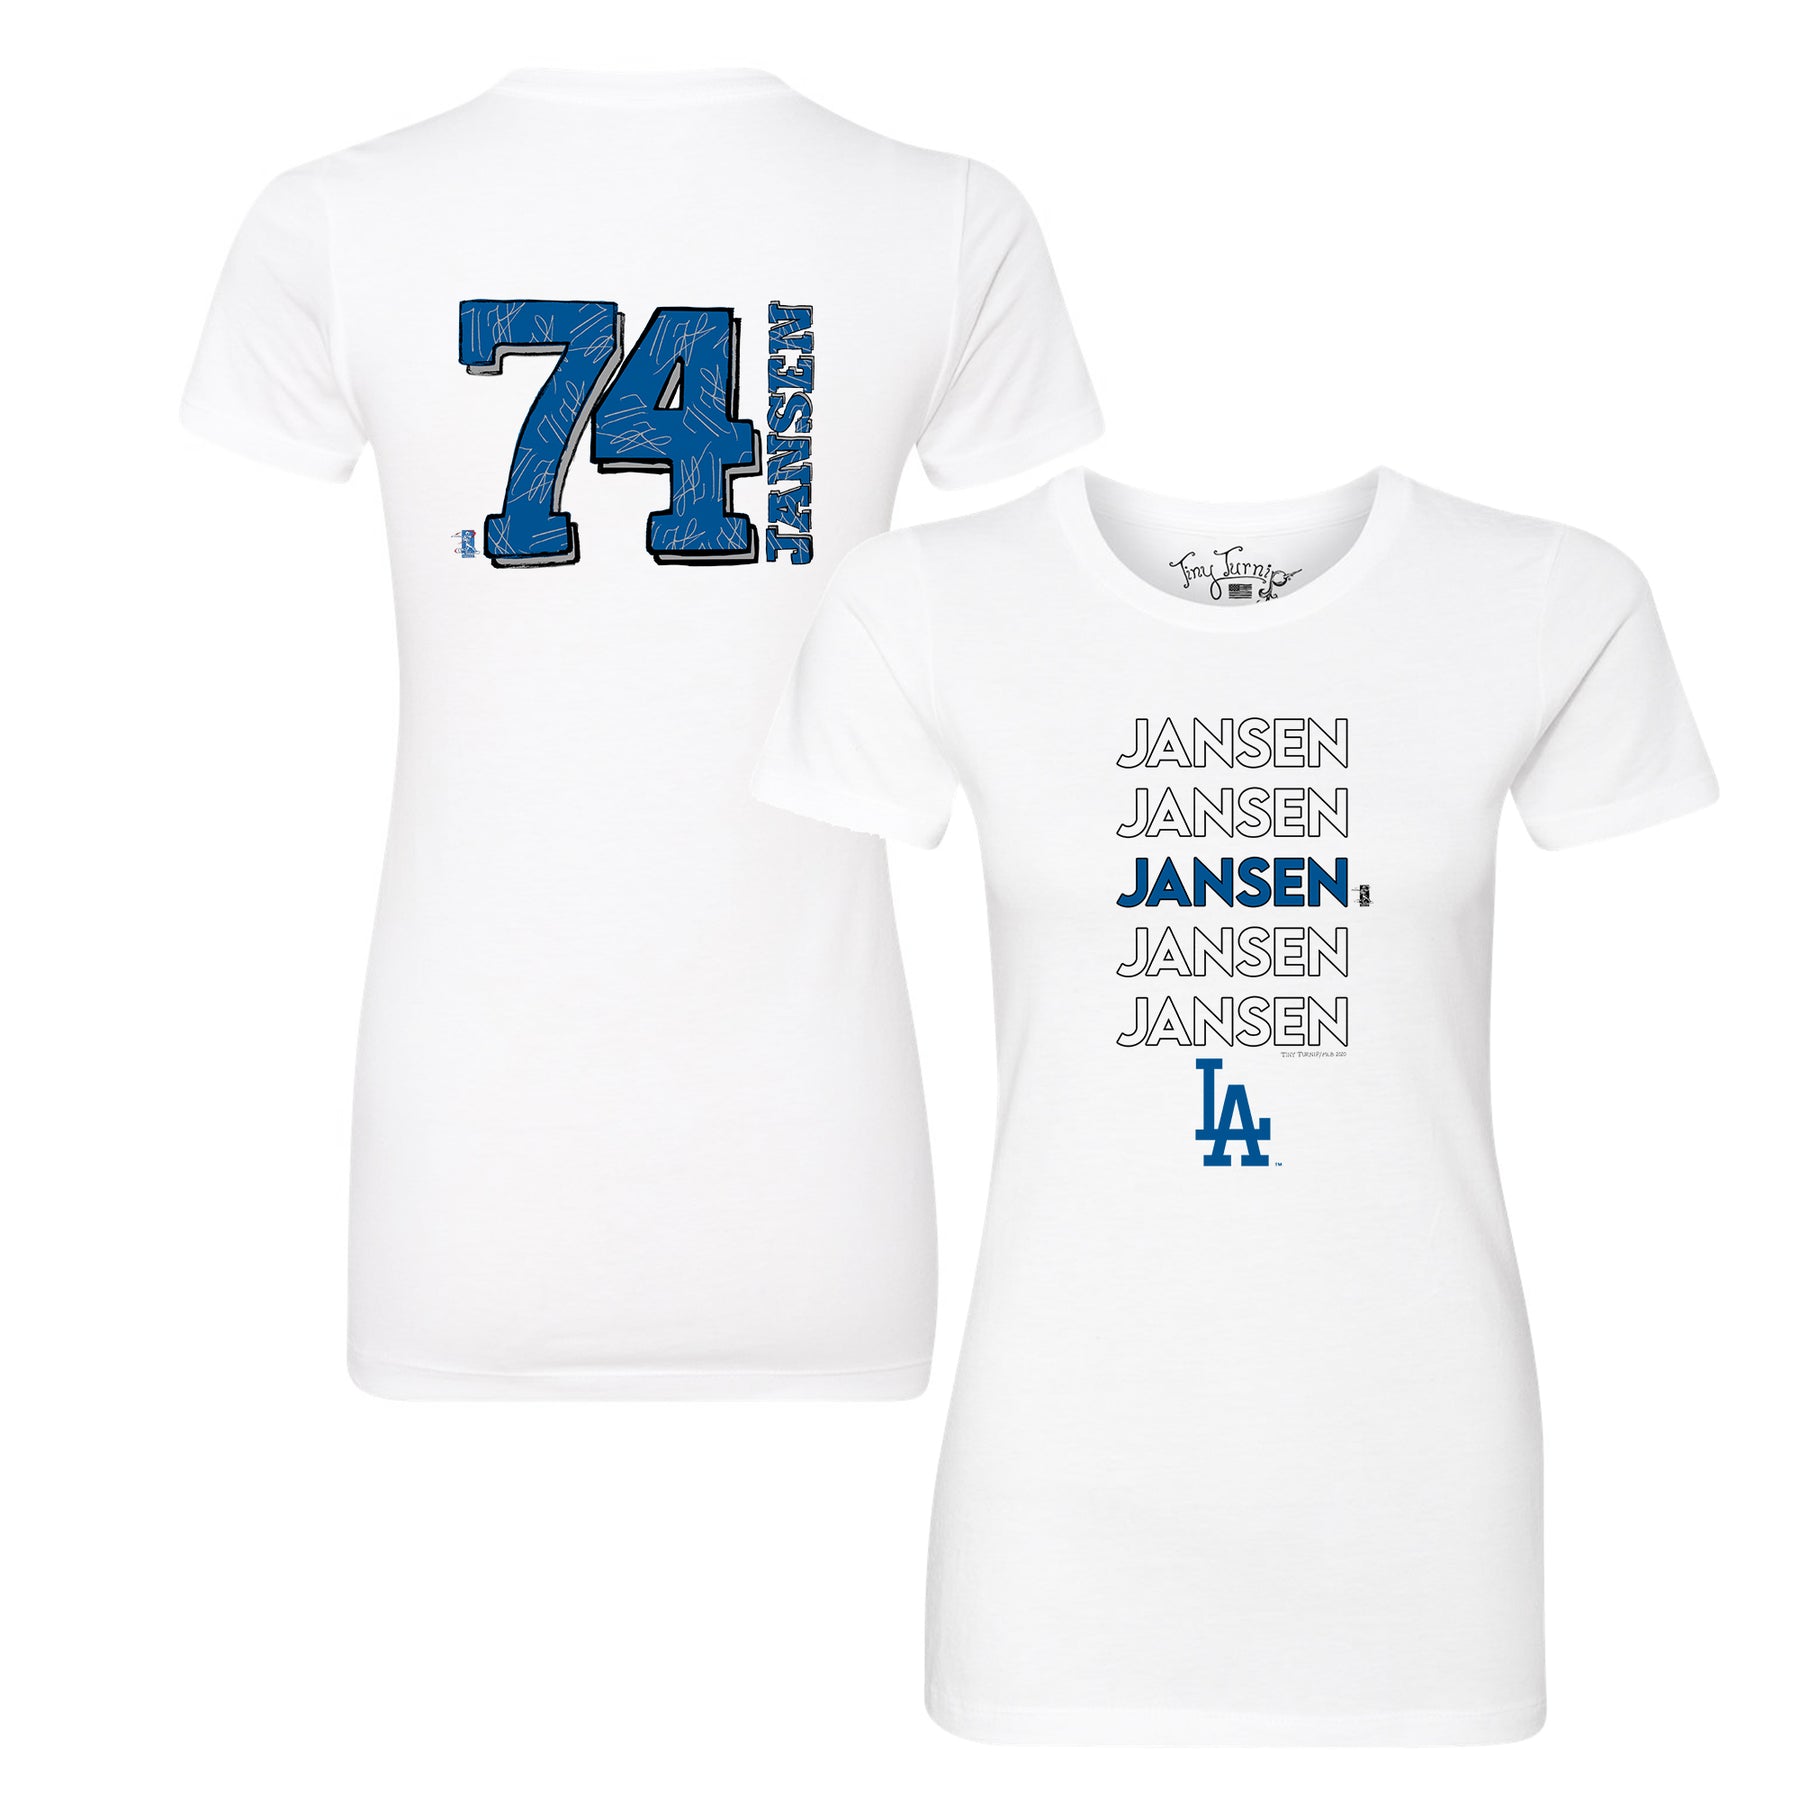 Dodgers Nation Joe Kelly T-Shirt